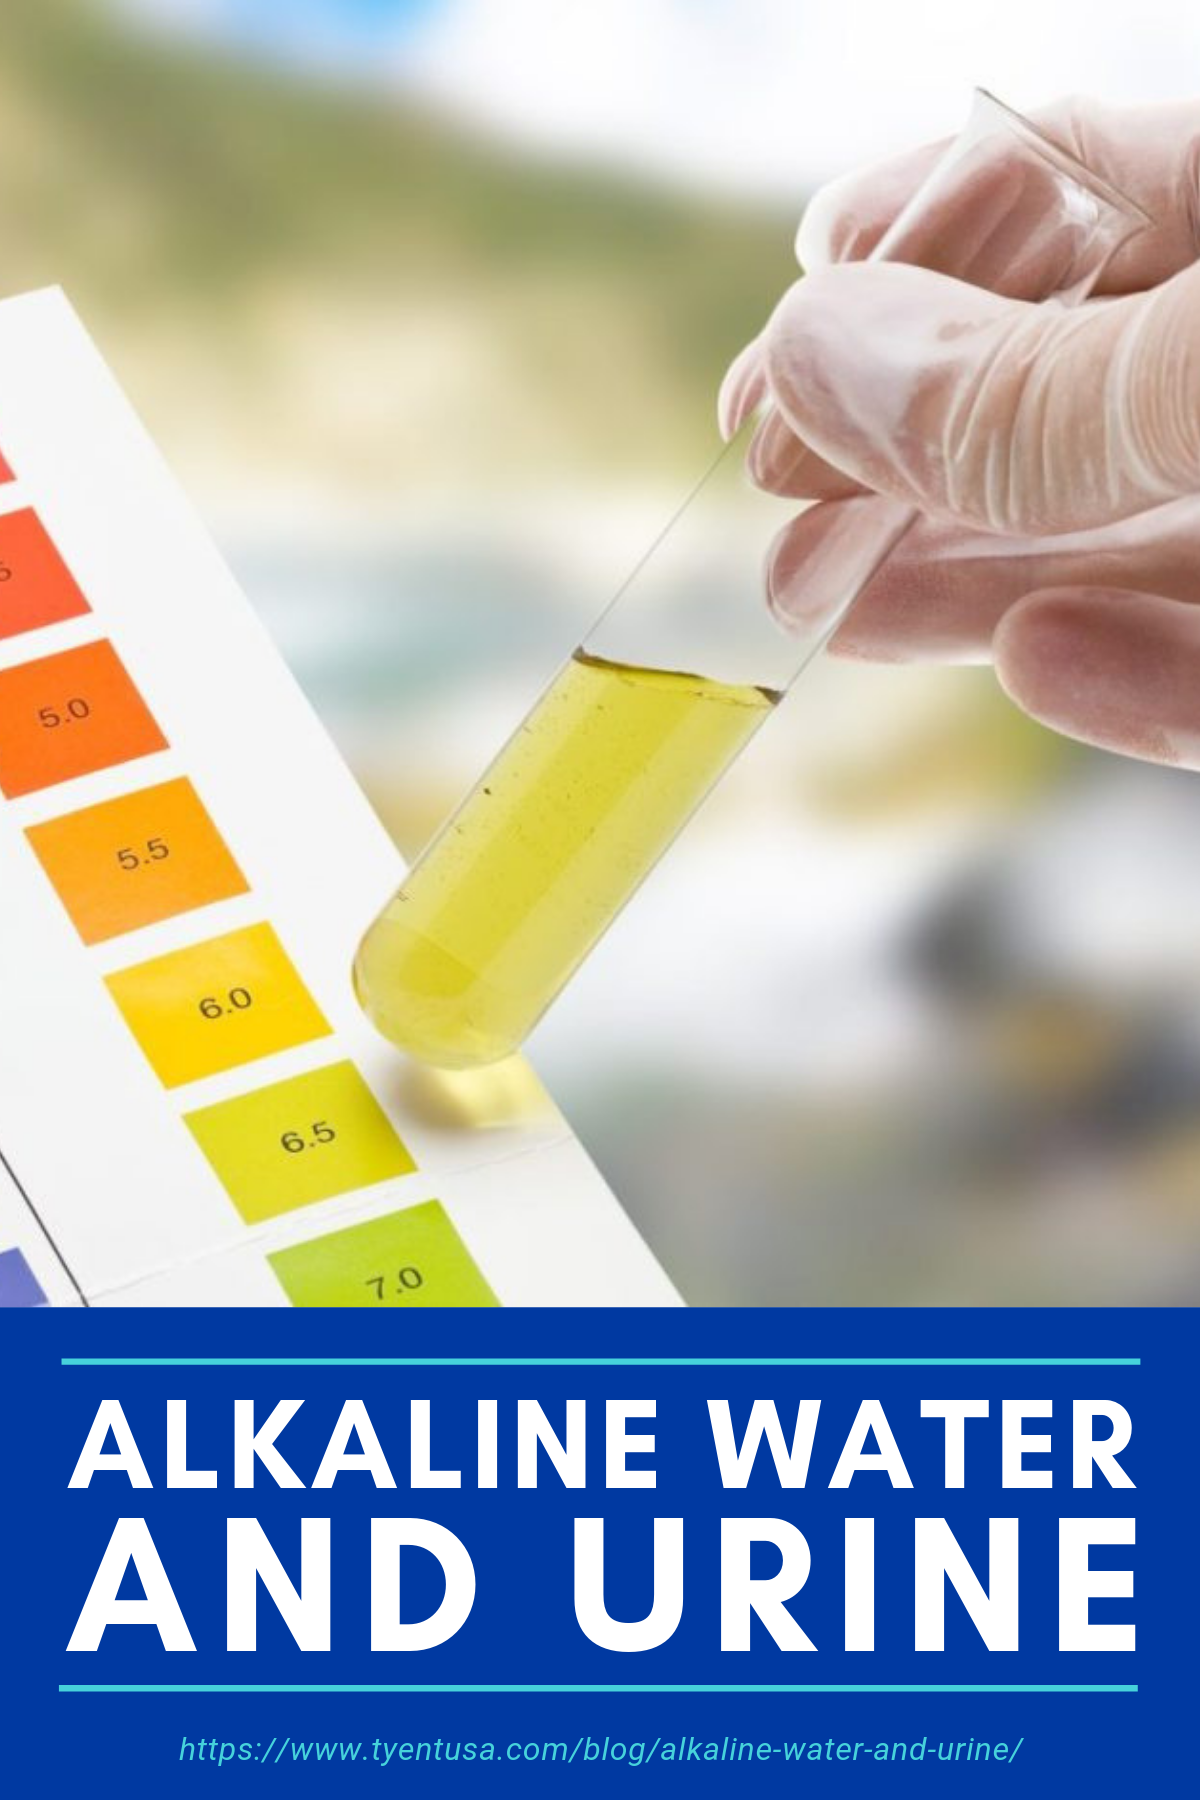 Alkaline Water And Urine https://www.tyentusa.com/blog/alkaline-water-and-urine/